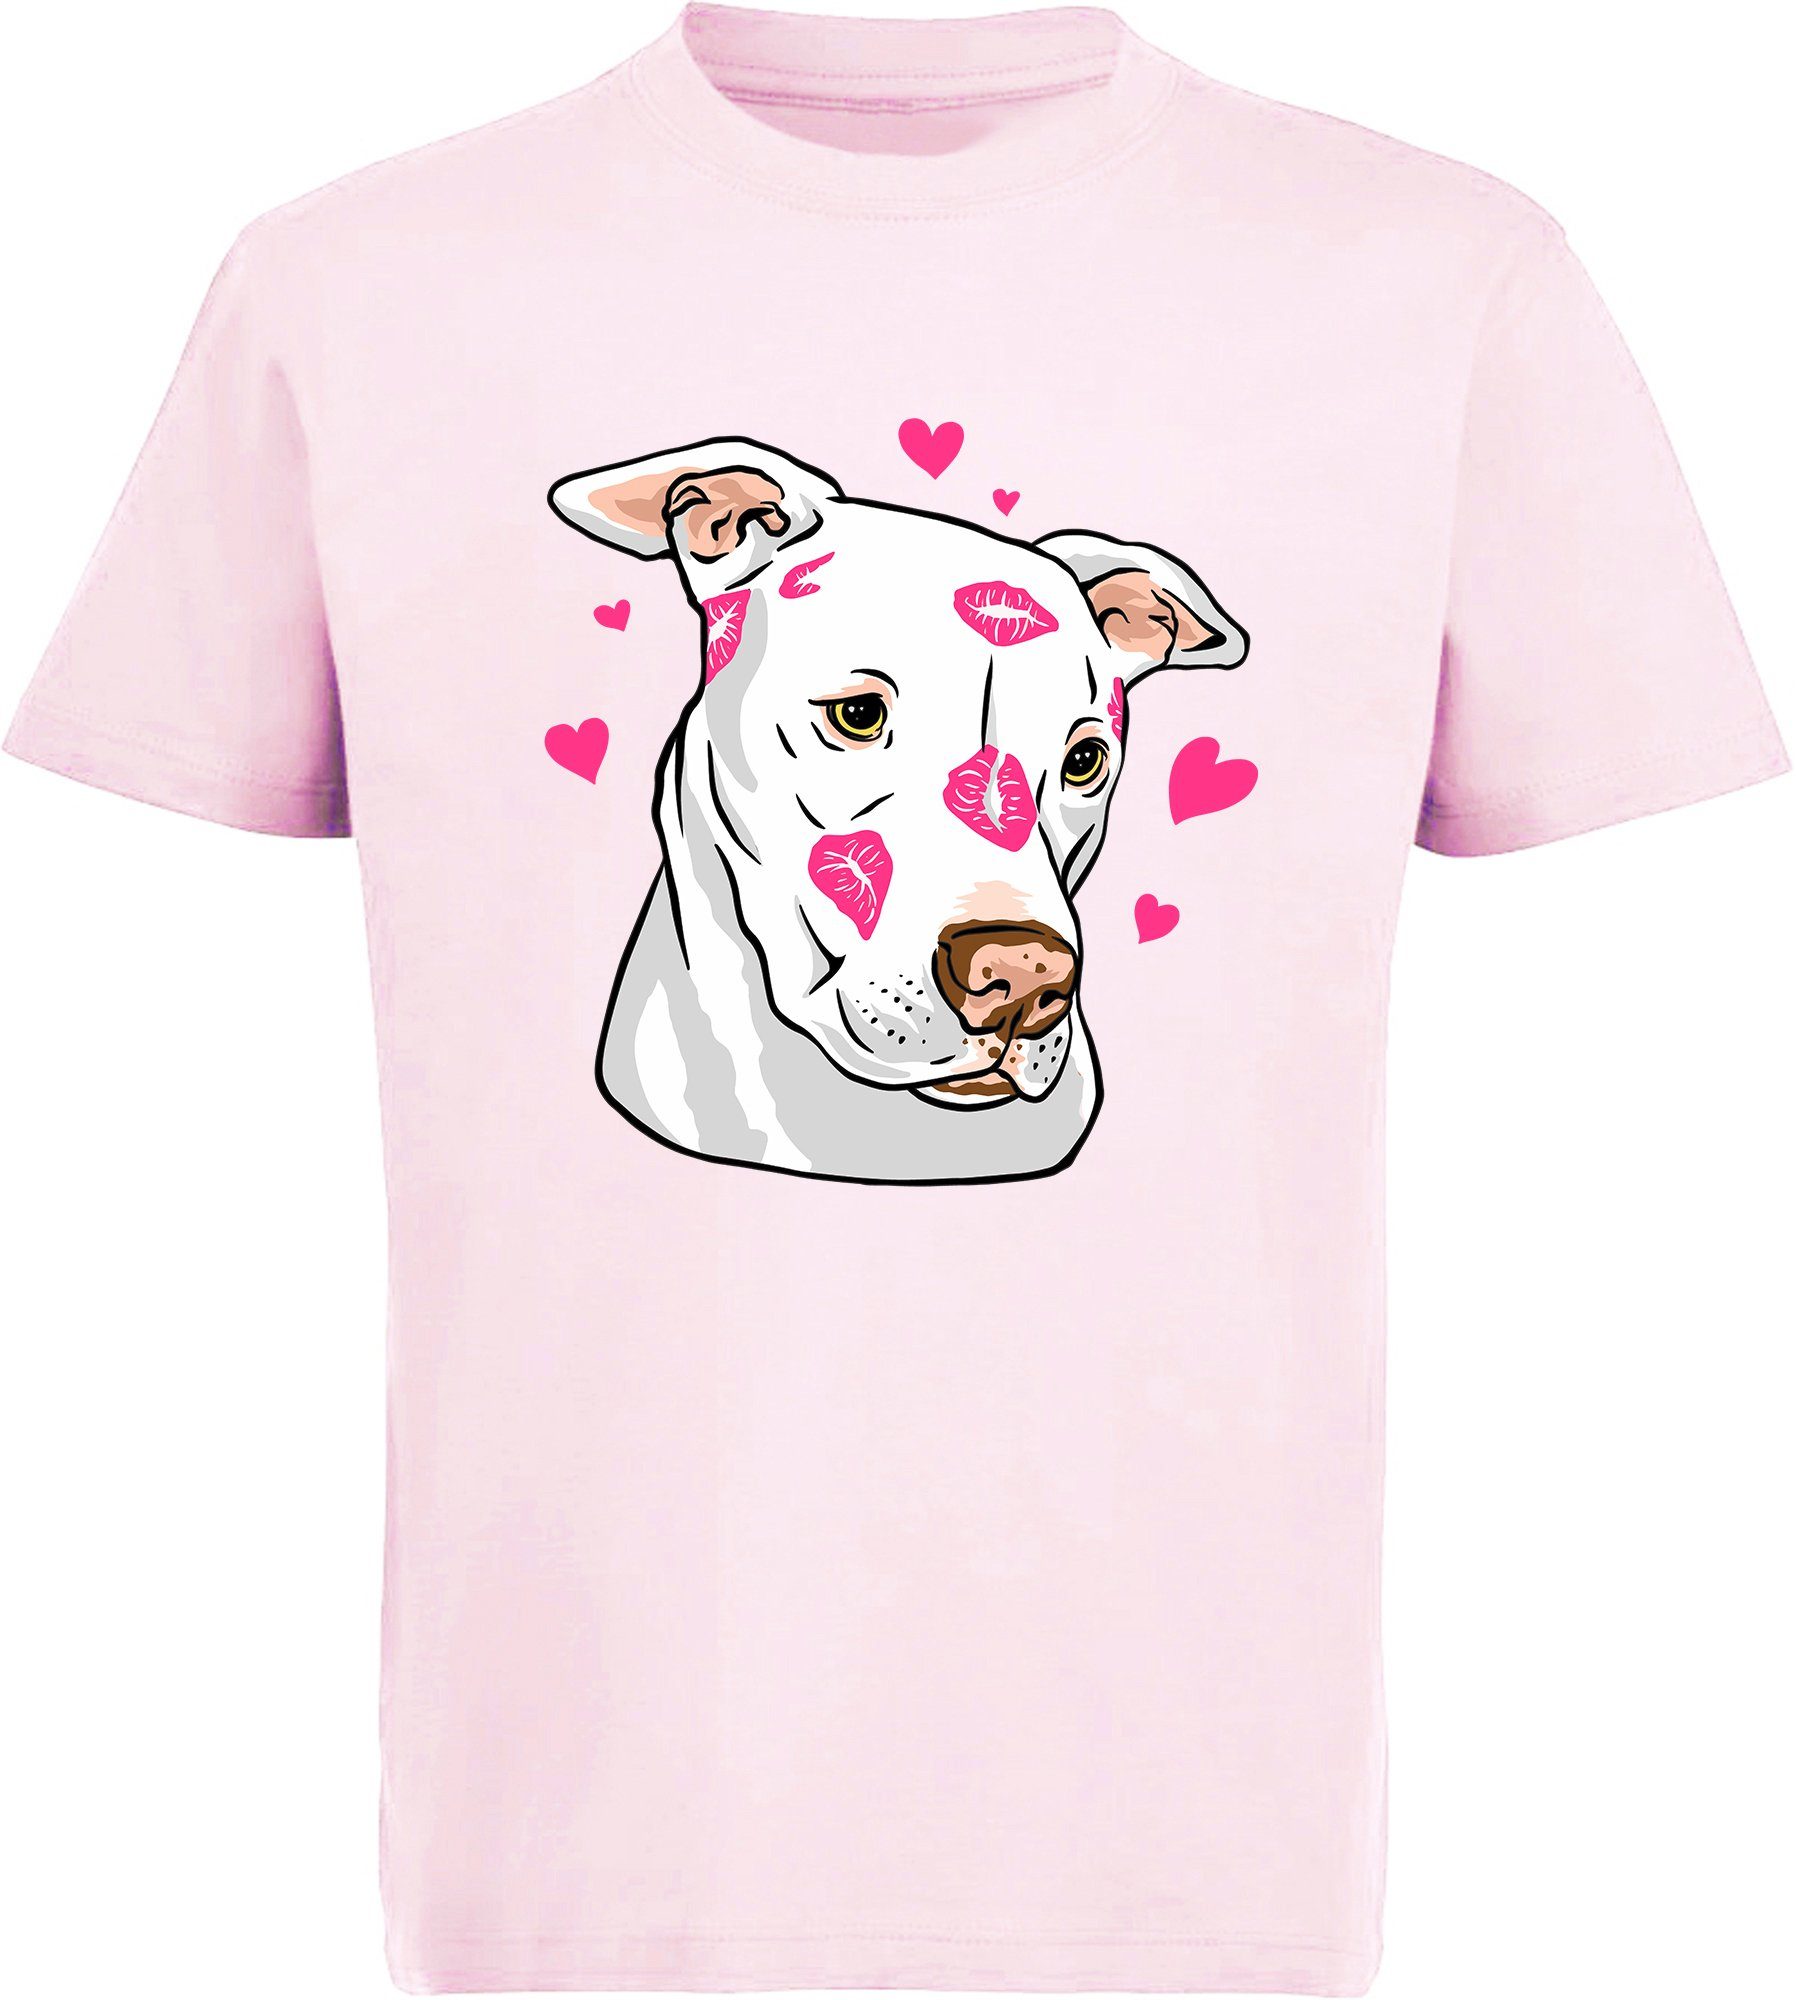 MyDesign24 Print-Shirt bedrucktes Kinder Hunde T-Shirt - Pitbull mit Herzen Baumwollshirt mit Aufdruck, i229 rosa | T-Shirts